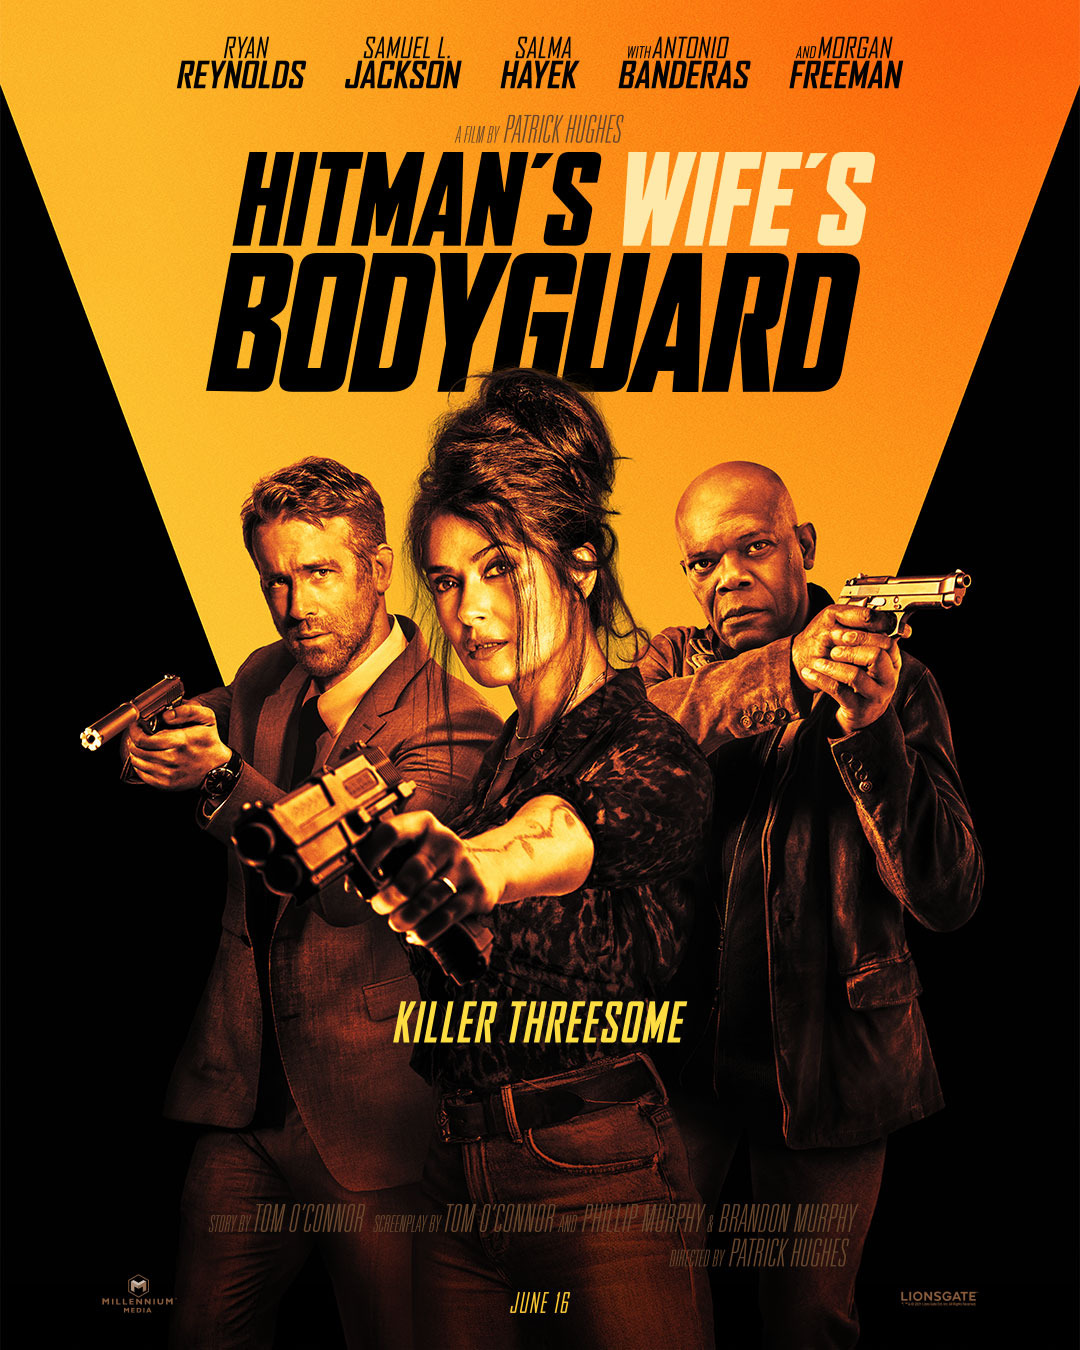 1st Trailer For 'Hitman’s Wife’s Bodyguard' Movie Starring Ryan Reynolds, Samuel L. Jackson, & Salma Hayek